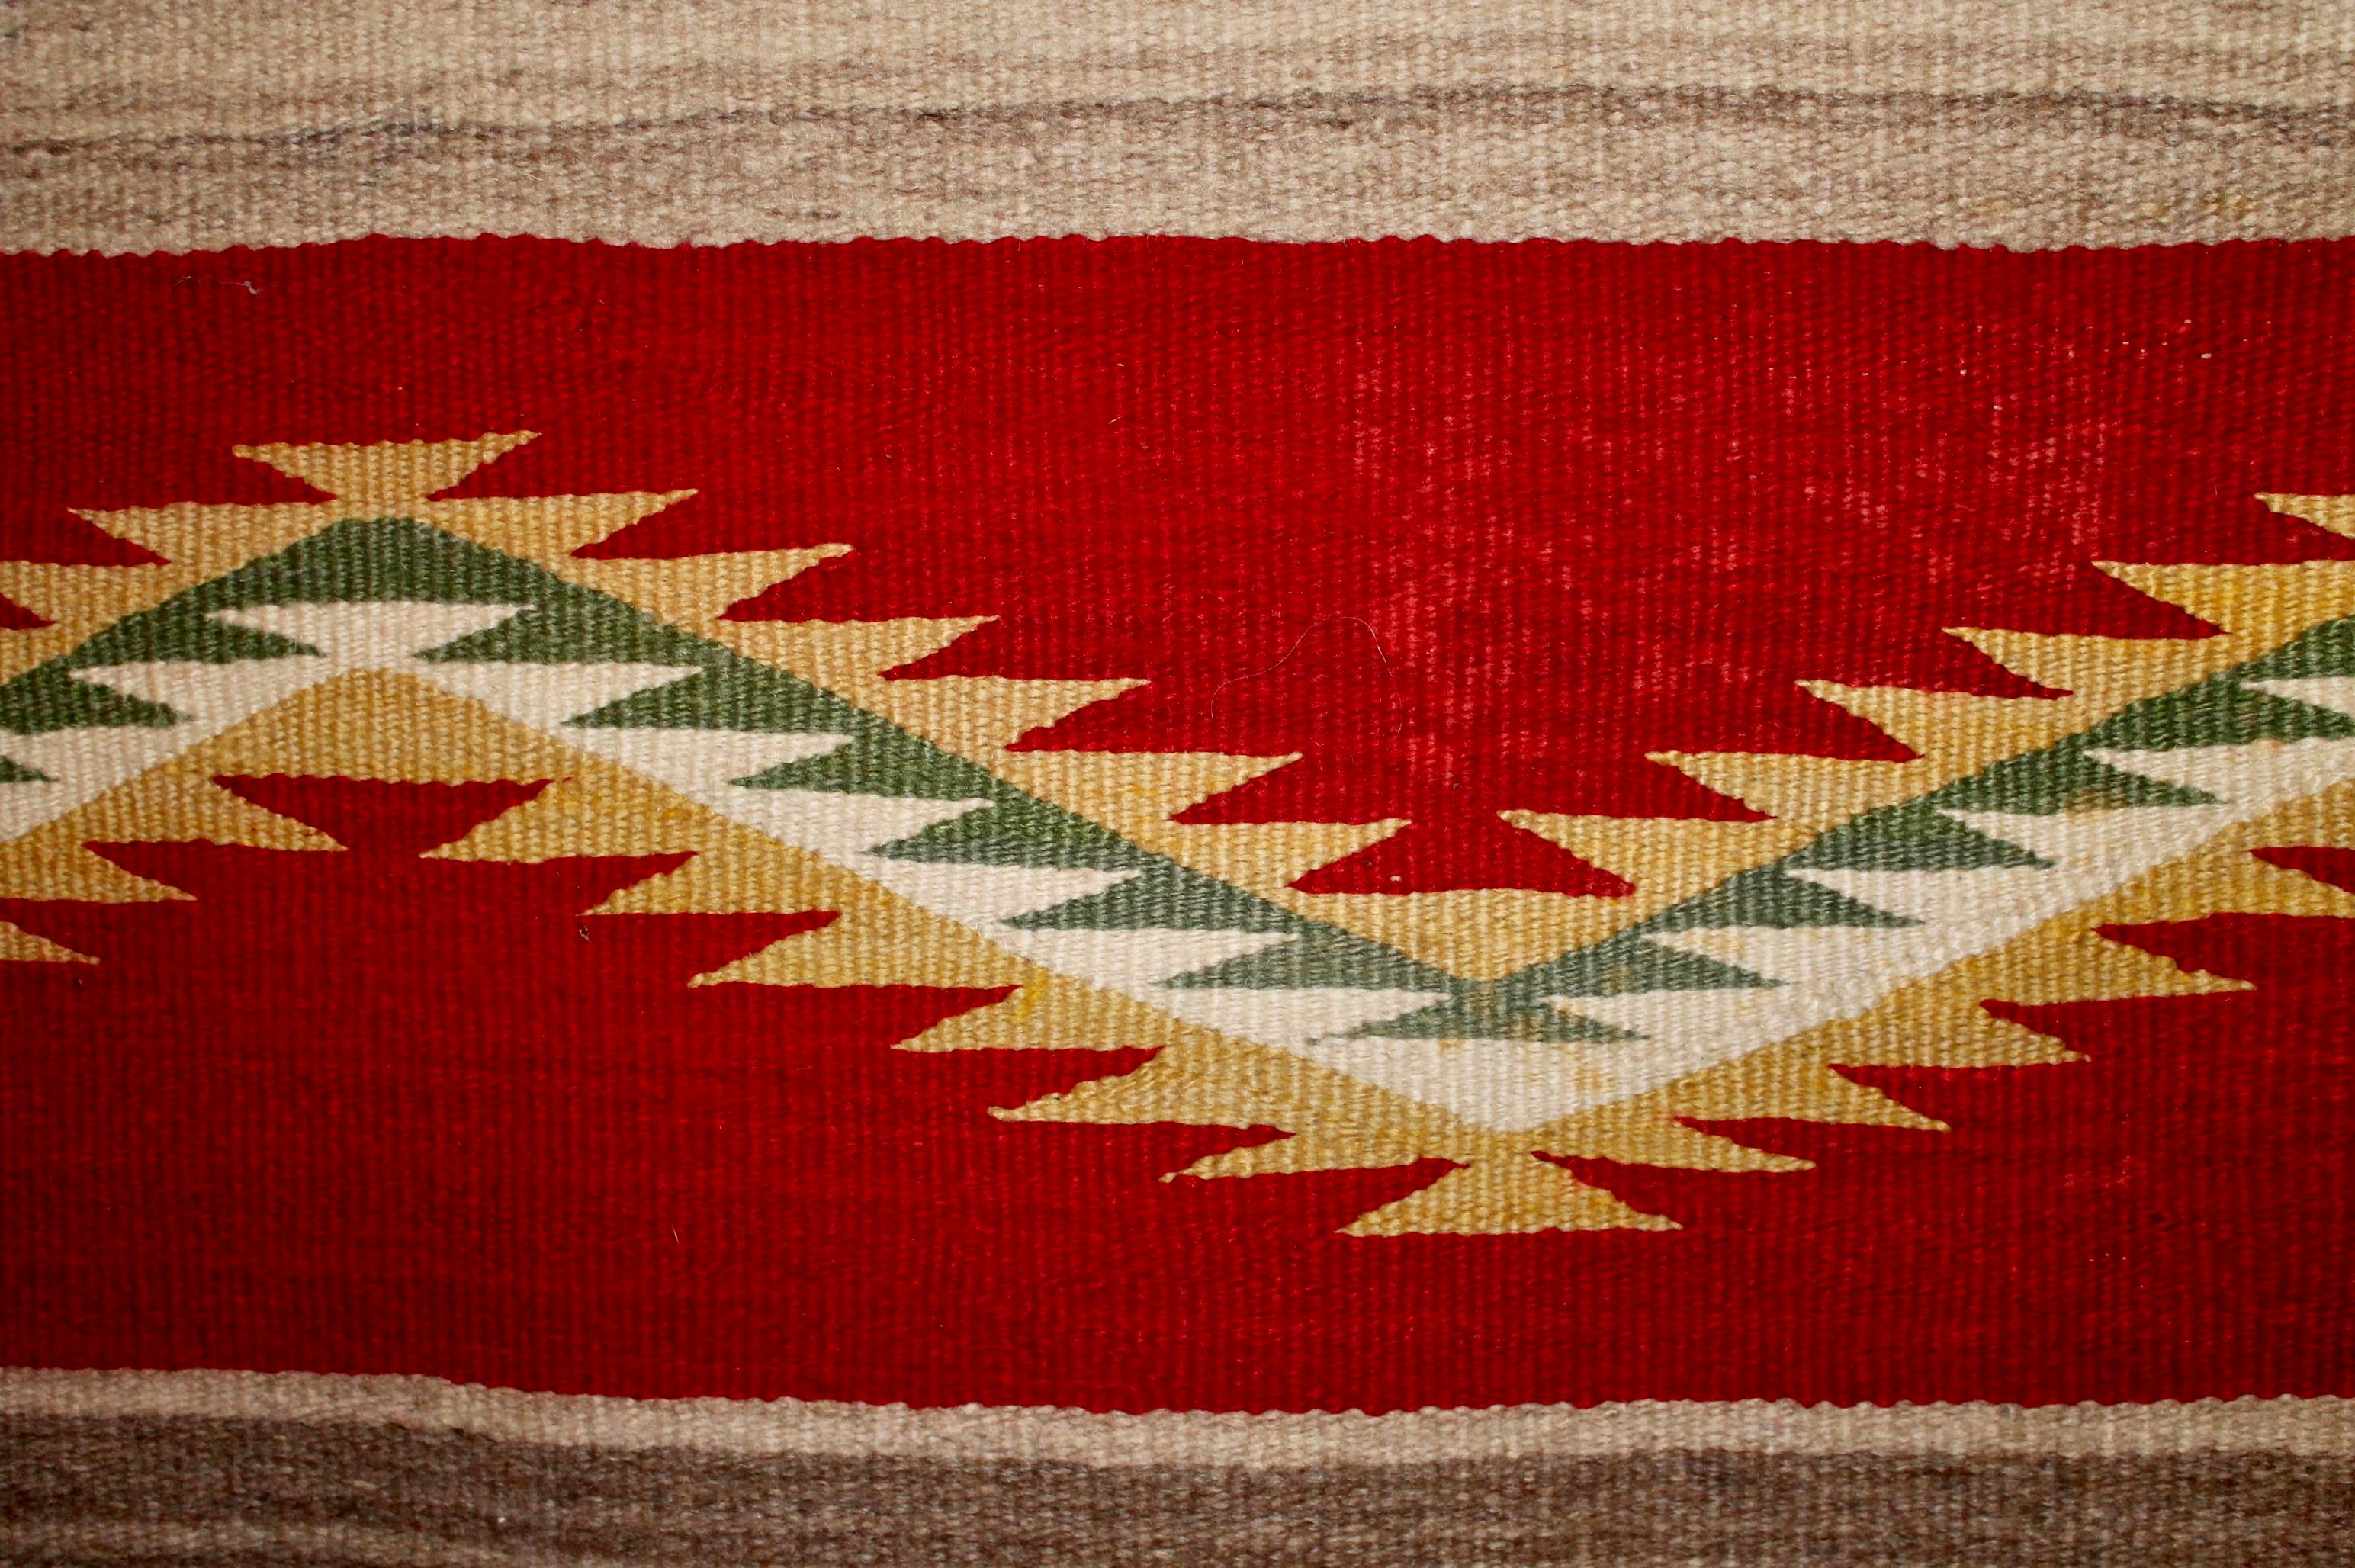 Navajo Transitional Blanket, circa 1880-1900 11